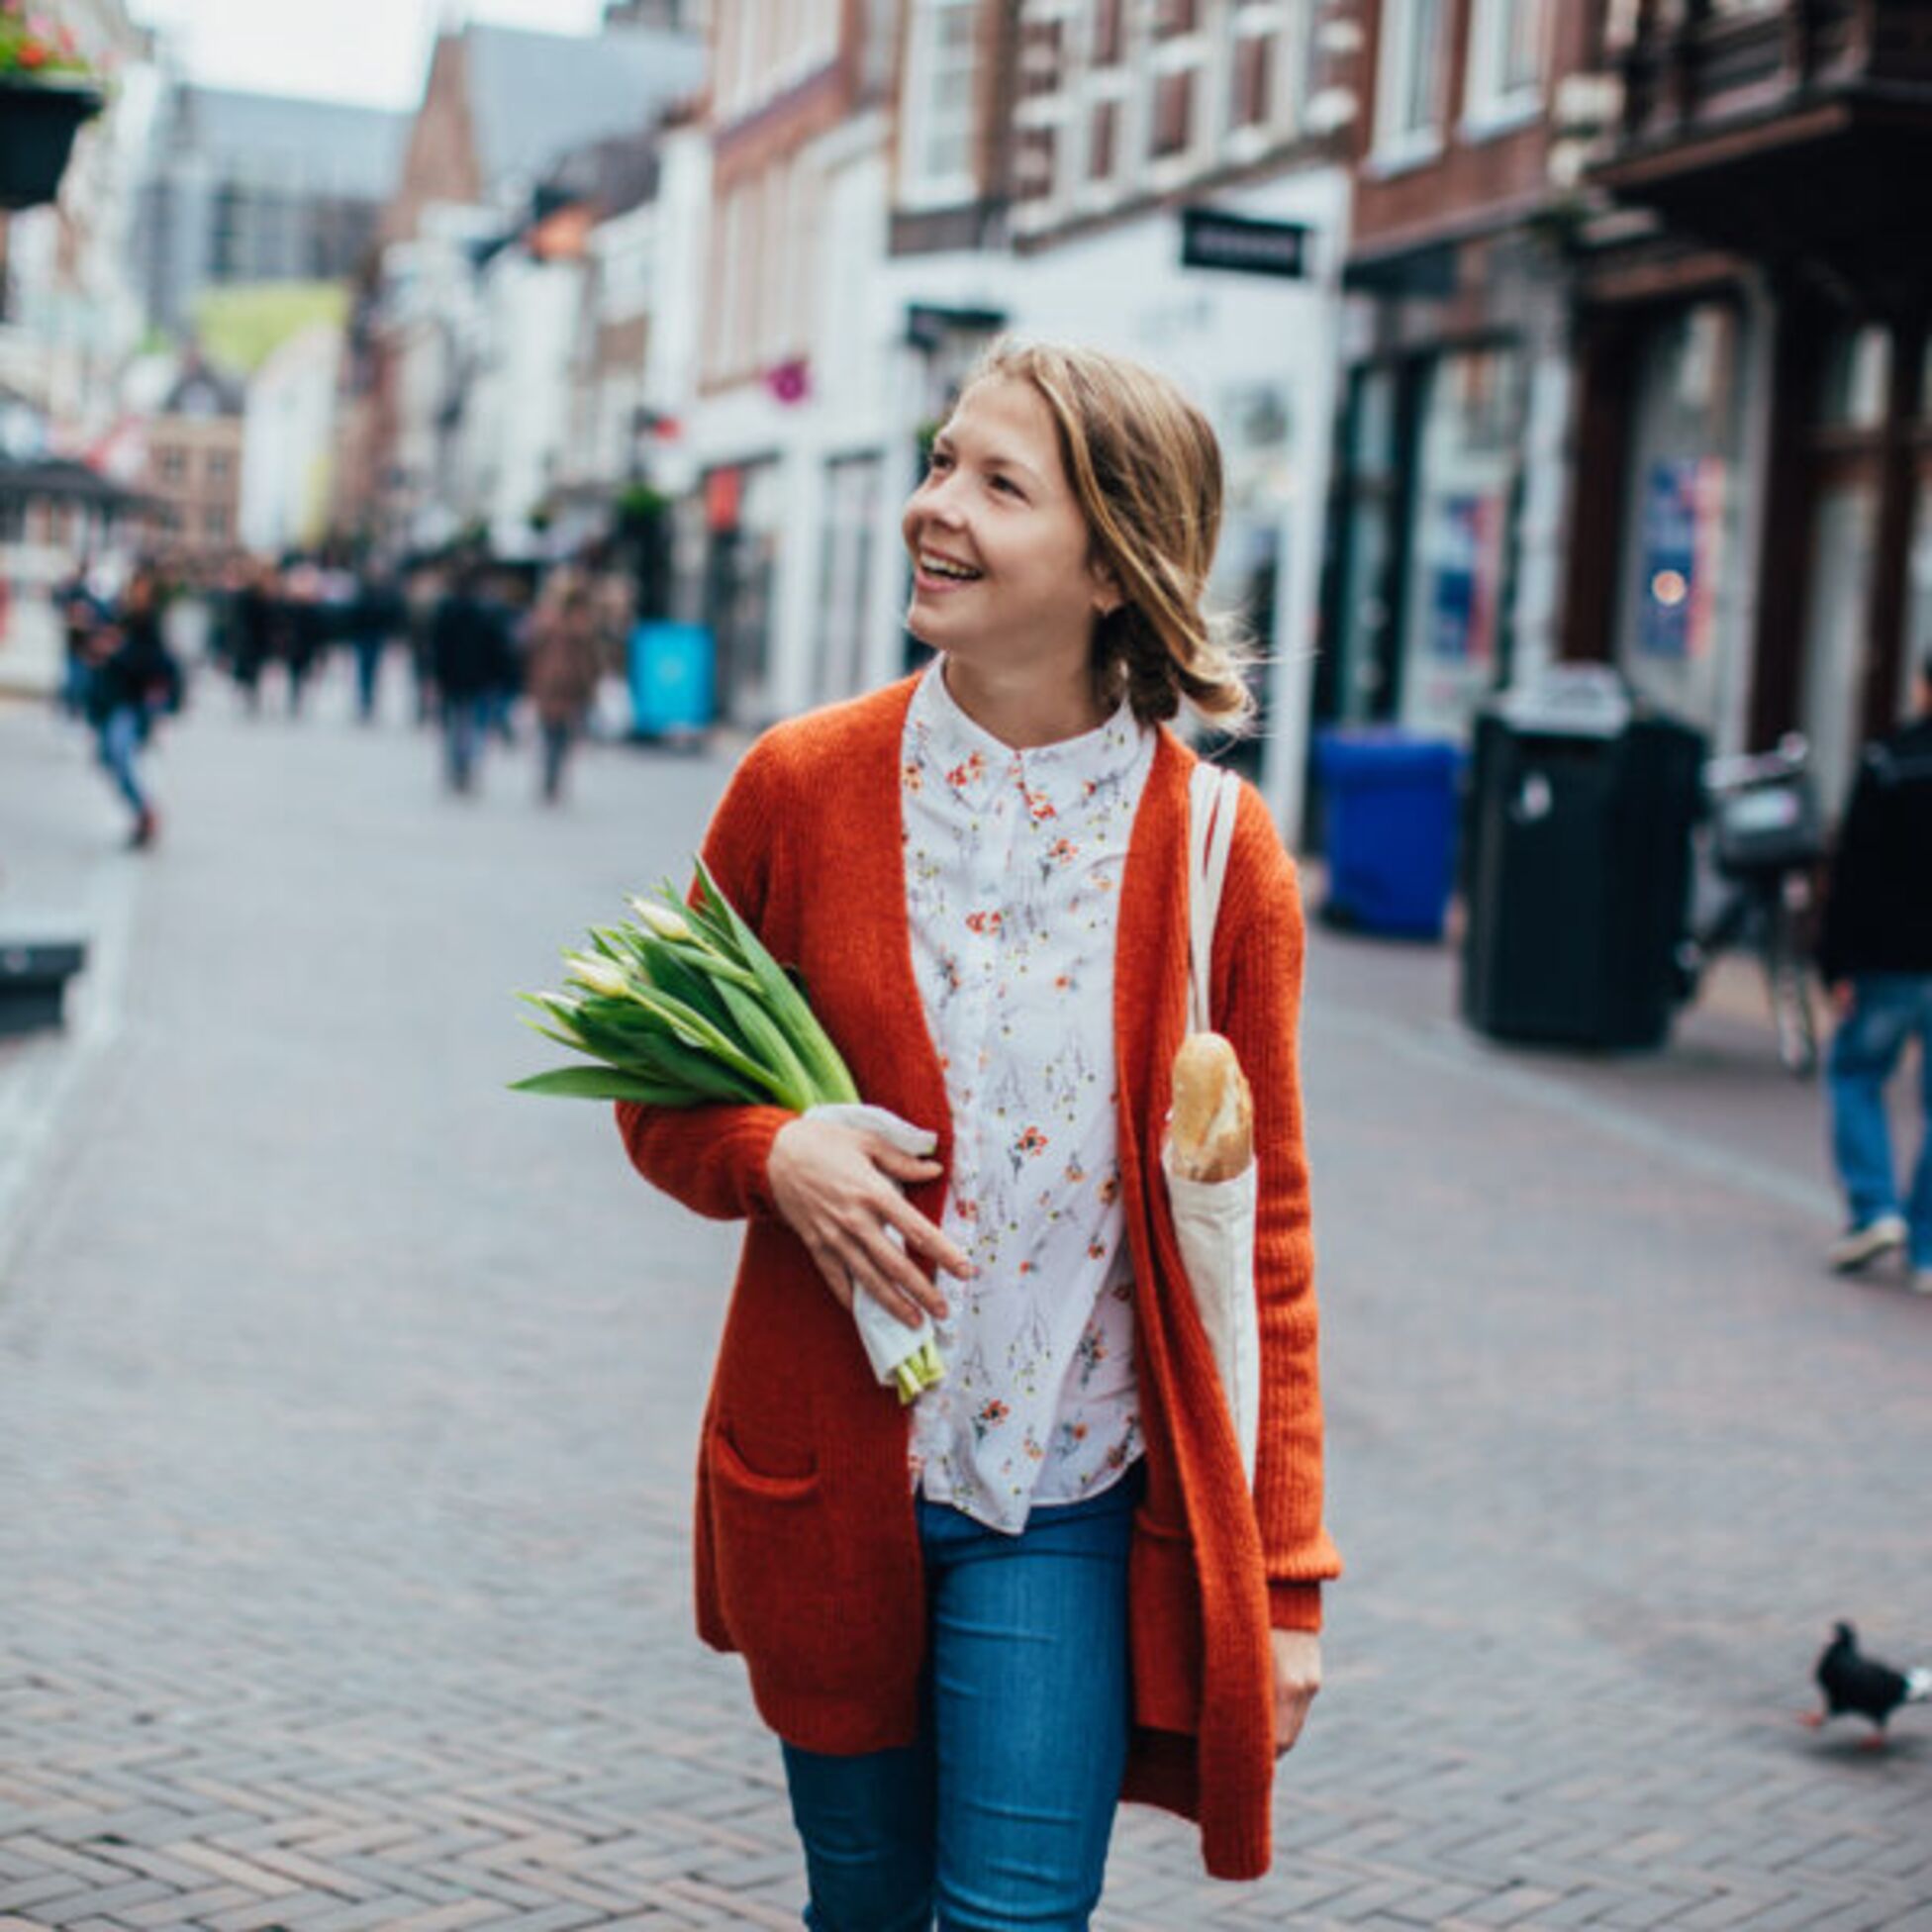 Frau mit Tulpen, die in die Niederlande ausgewandert ist